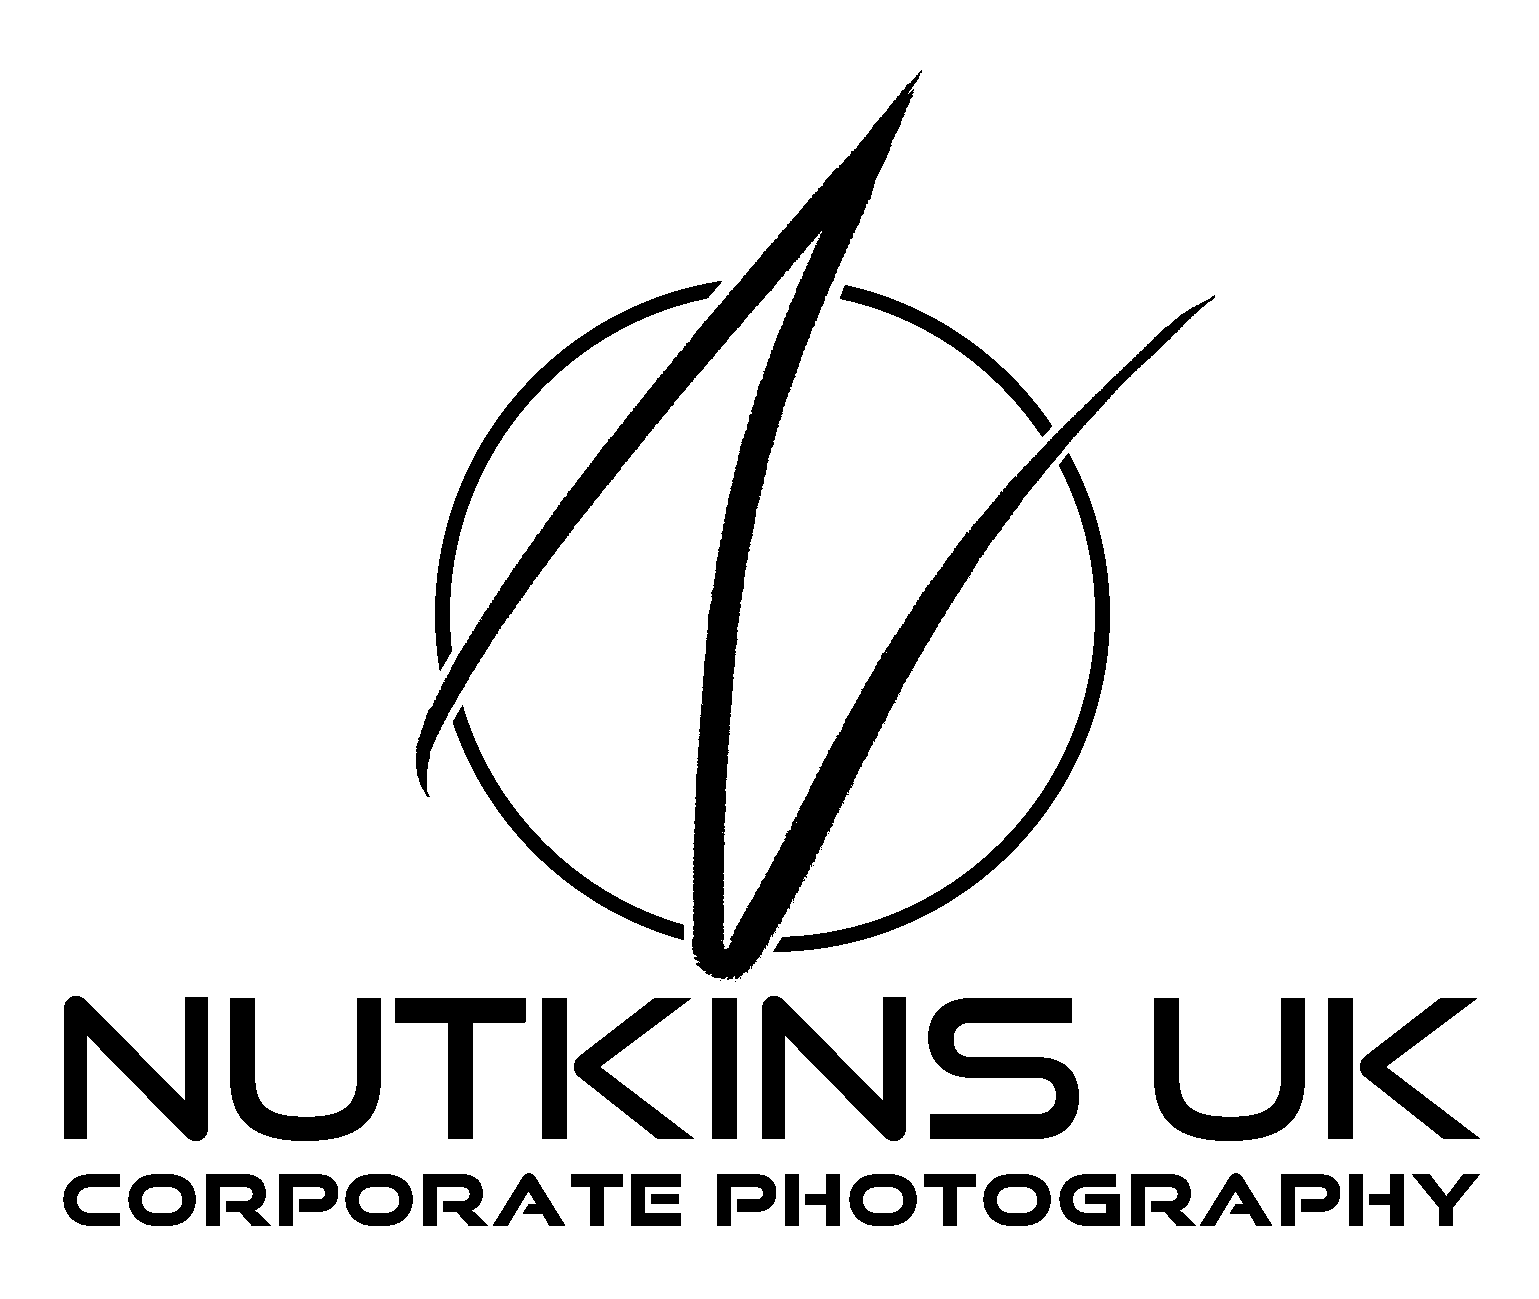 Nutkins UK Corporate Photography